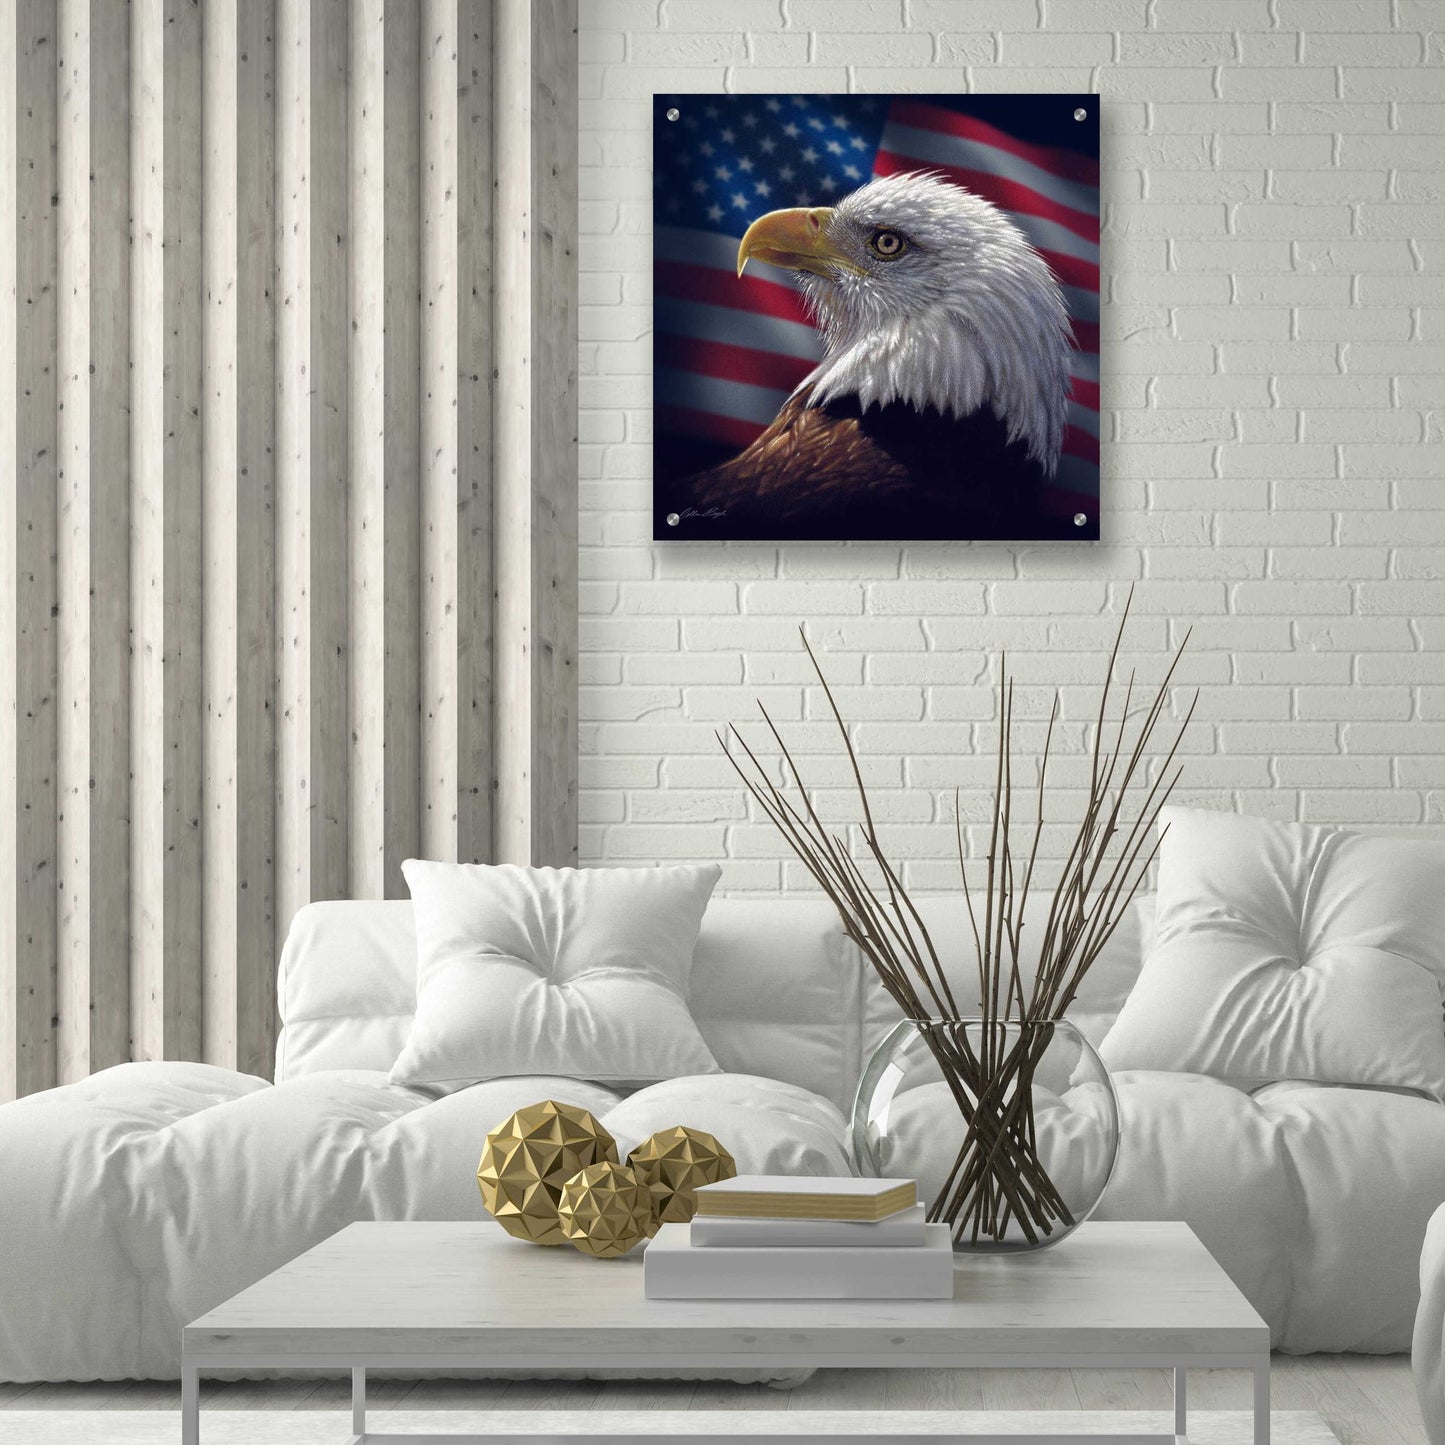 Epic Art 'American Bald Eagle' by Collin Bogle Acrylic Glass Wall Art,24x24